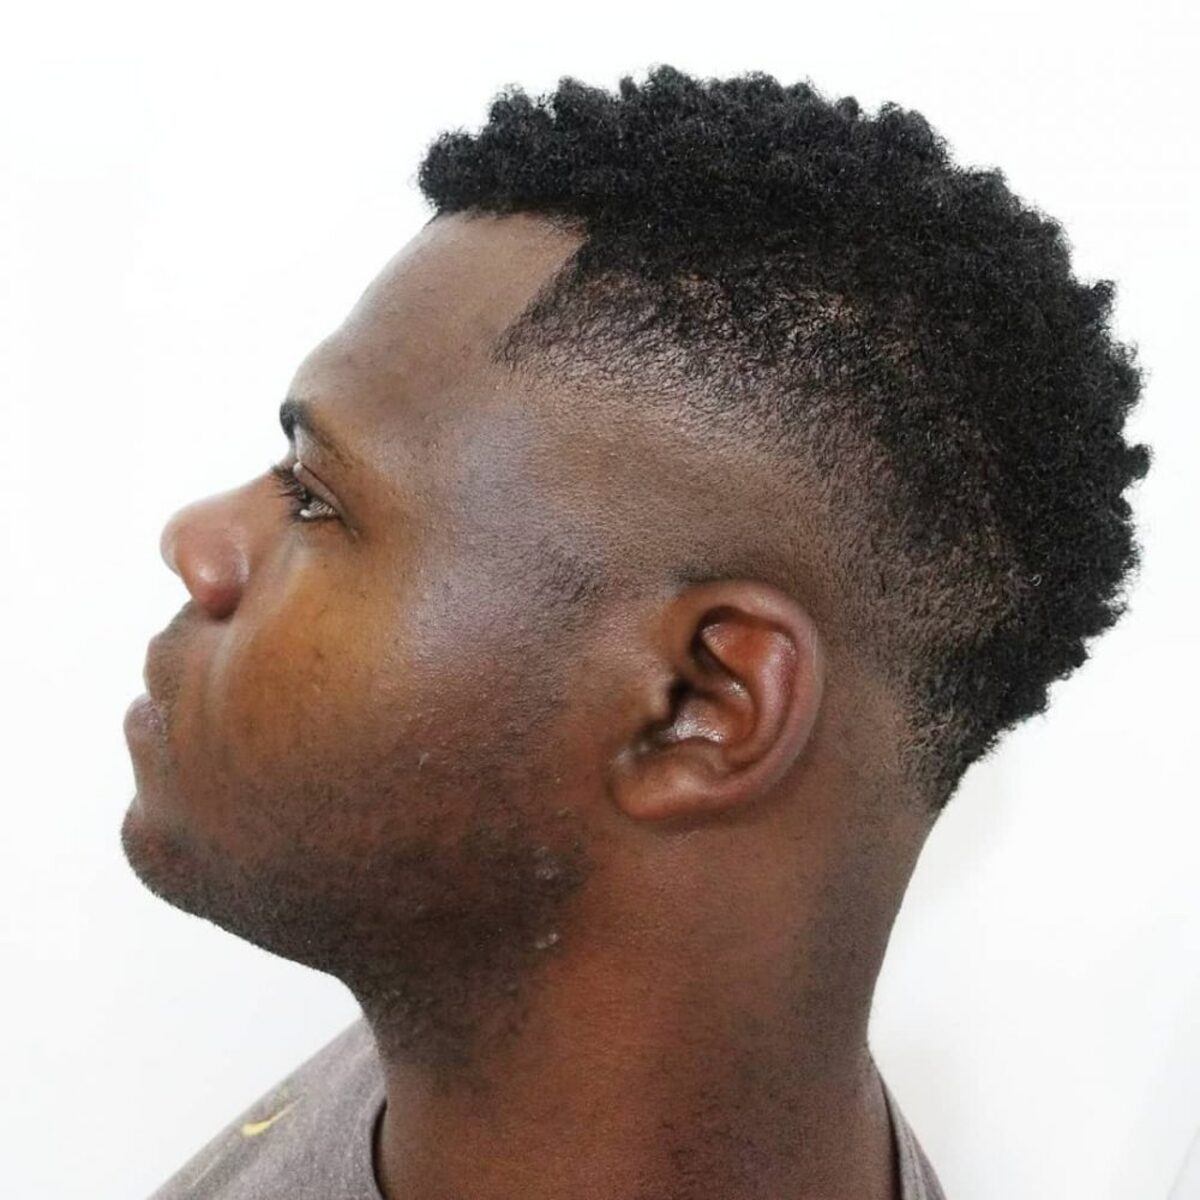 Mohawk Fade on an Afro Haircut